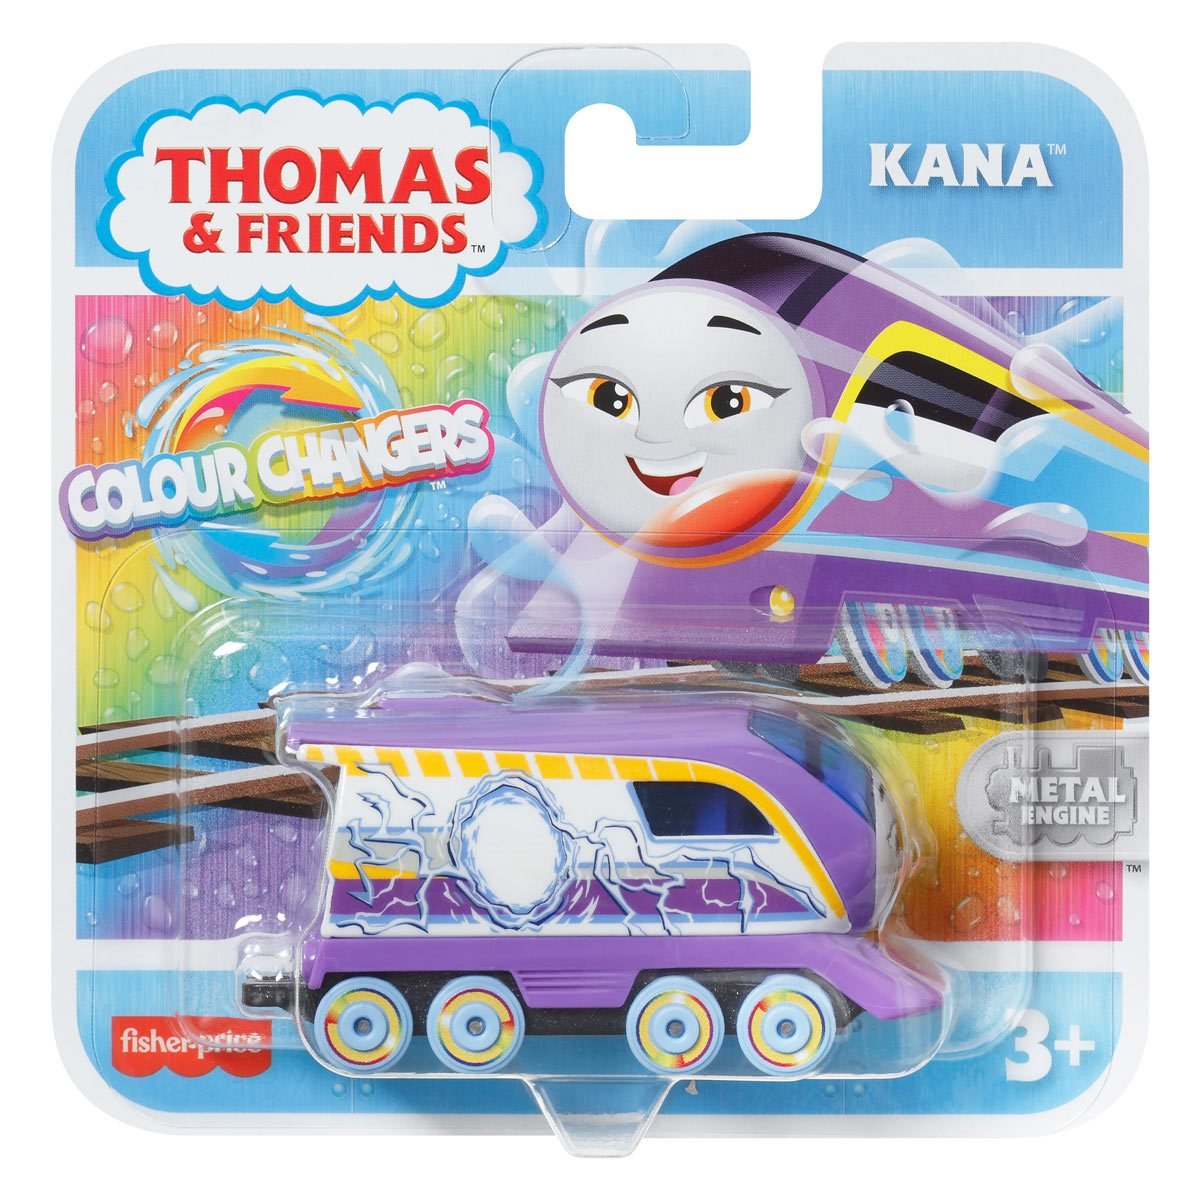 Locomotiva metalica, Thomas and Friends, Color Change, Kana, HMC48 and